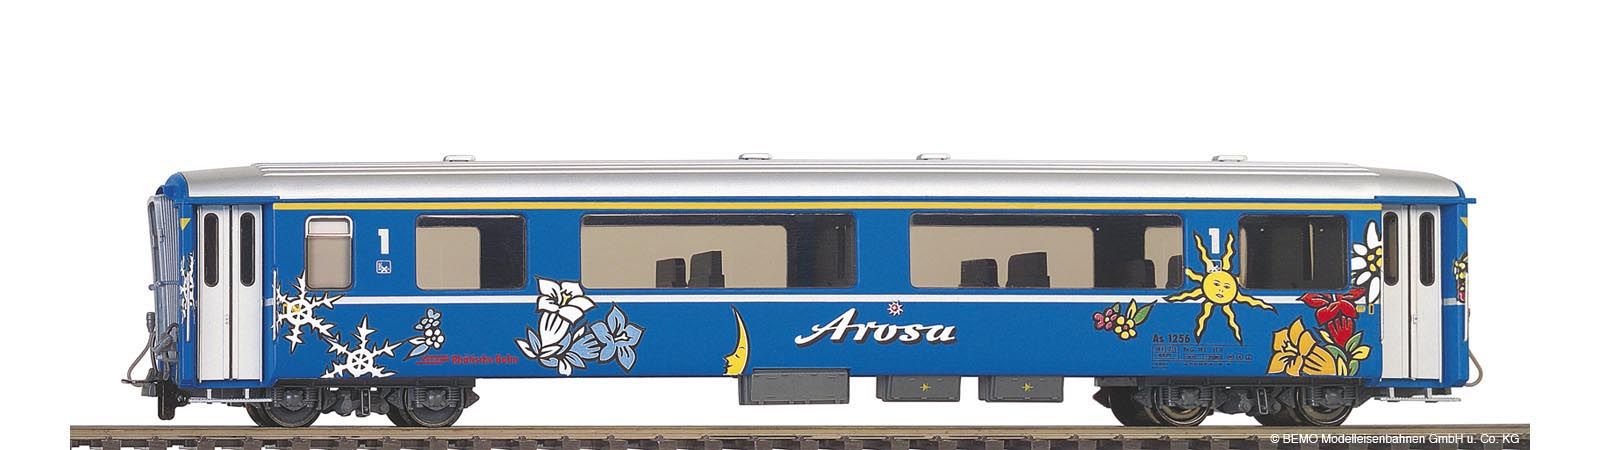 3268146 Bemo - Personenwagen RhB As 1256 Salonwagen Arosa Express - Spur H0m